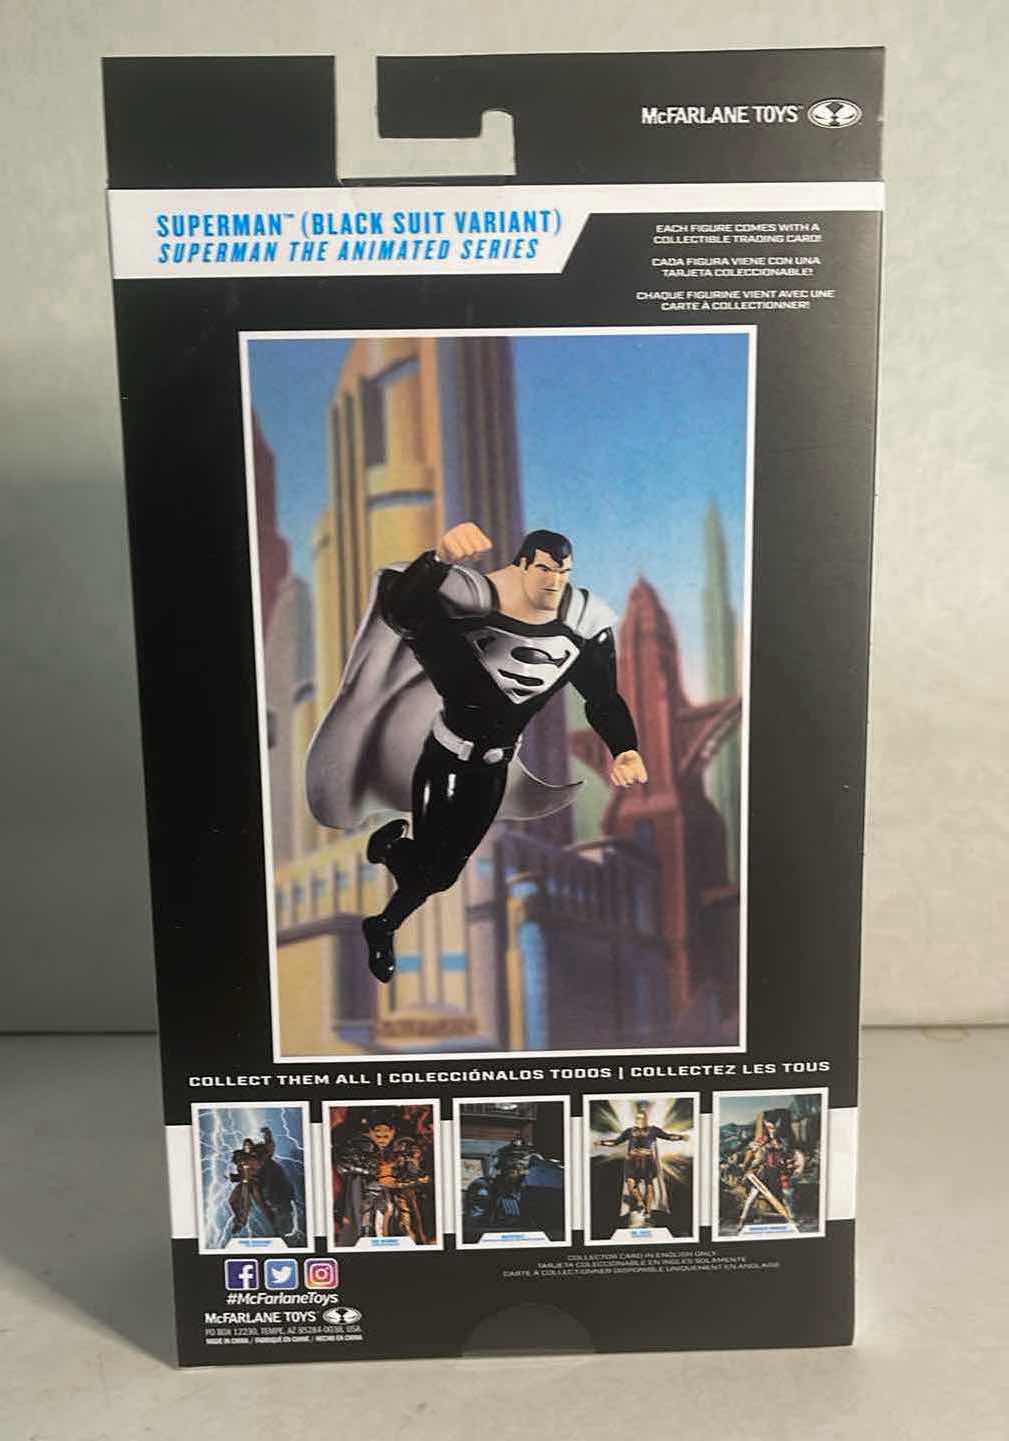 Photo 2 of NIB DC MULTIVERSE SUPERMAN THE ANIMATED SERIES “SUPERMAN (BLACK SUIT VARIANT)” ACTION FIGURE- RETAIL PRICE $22.99